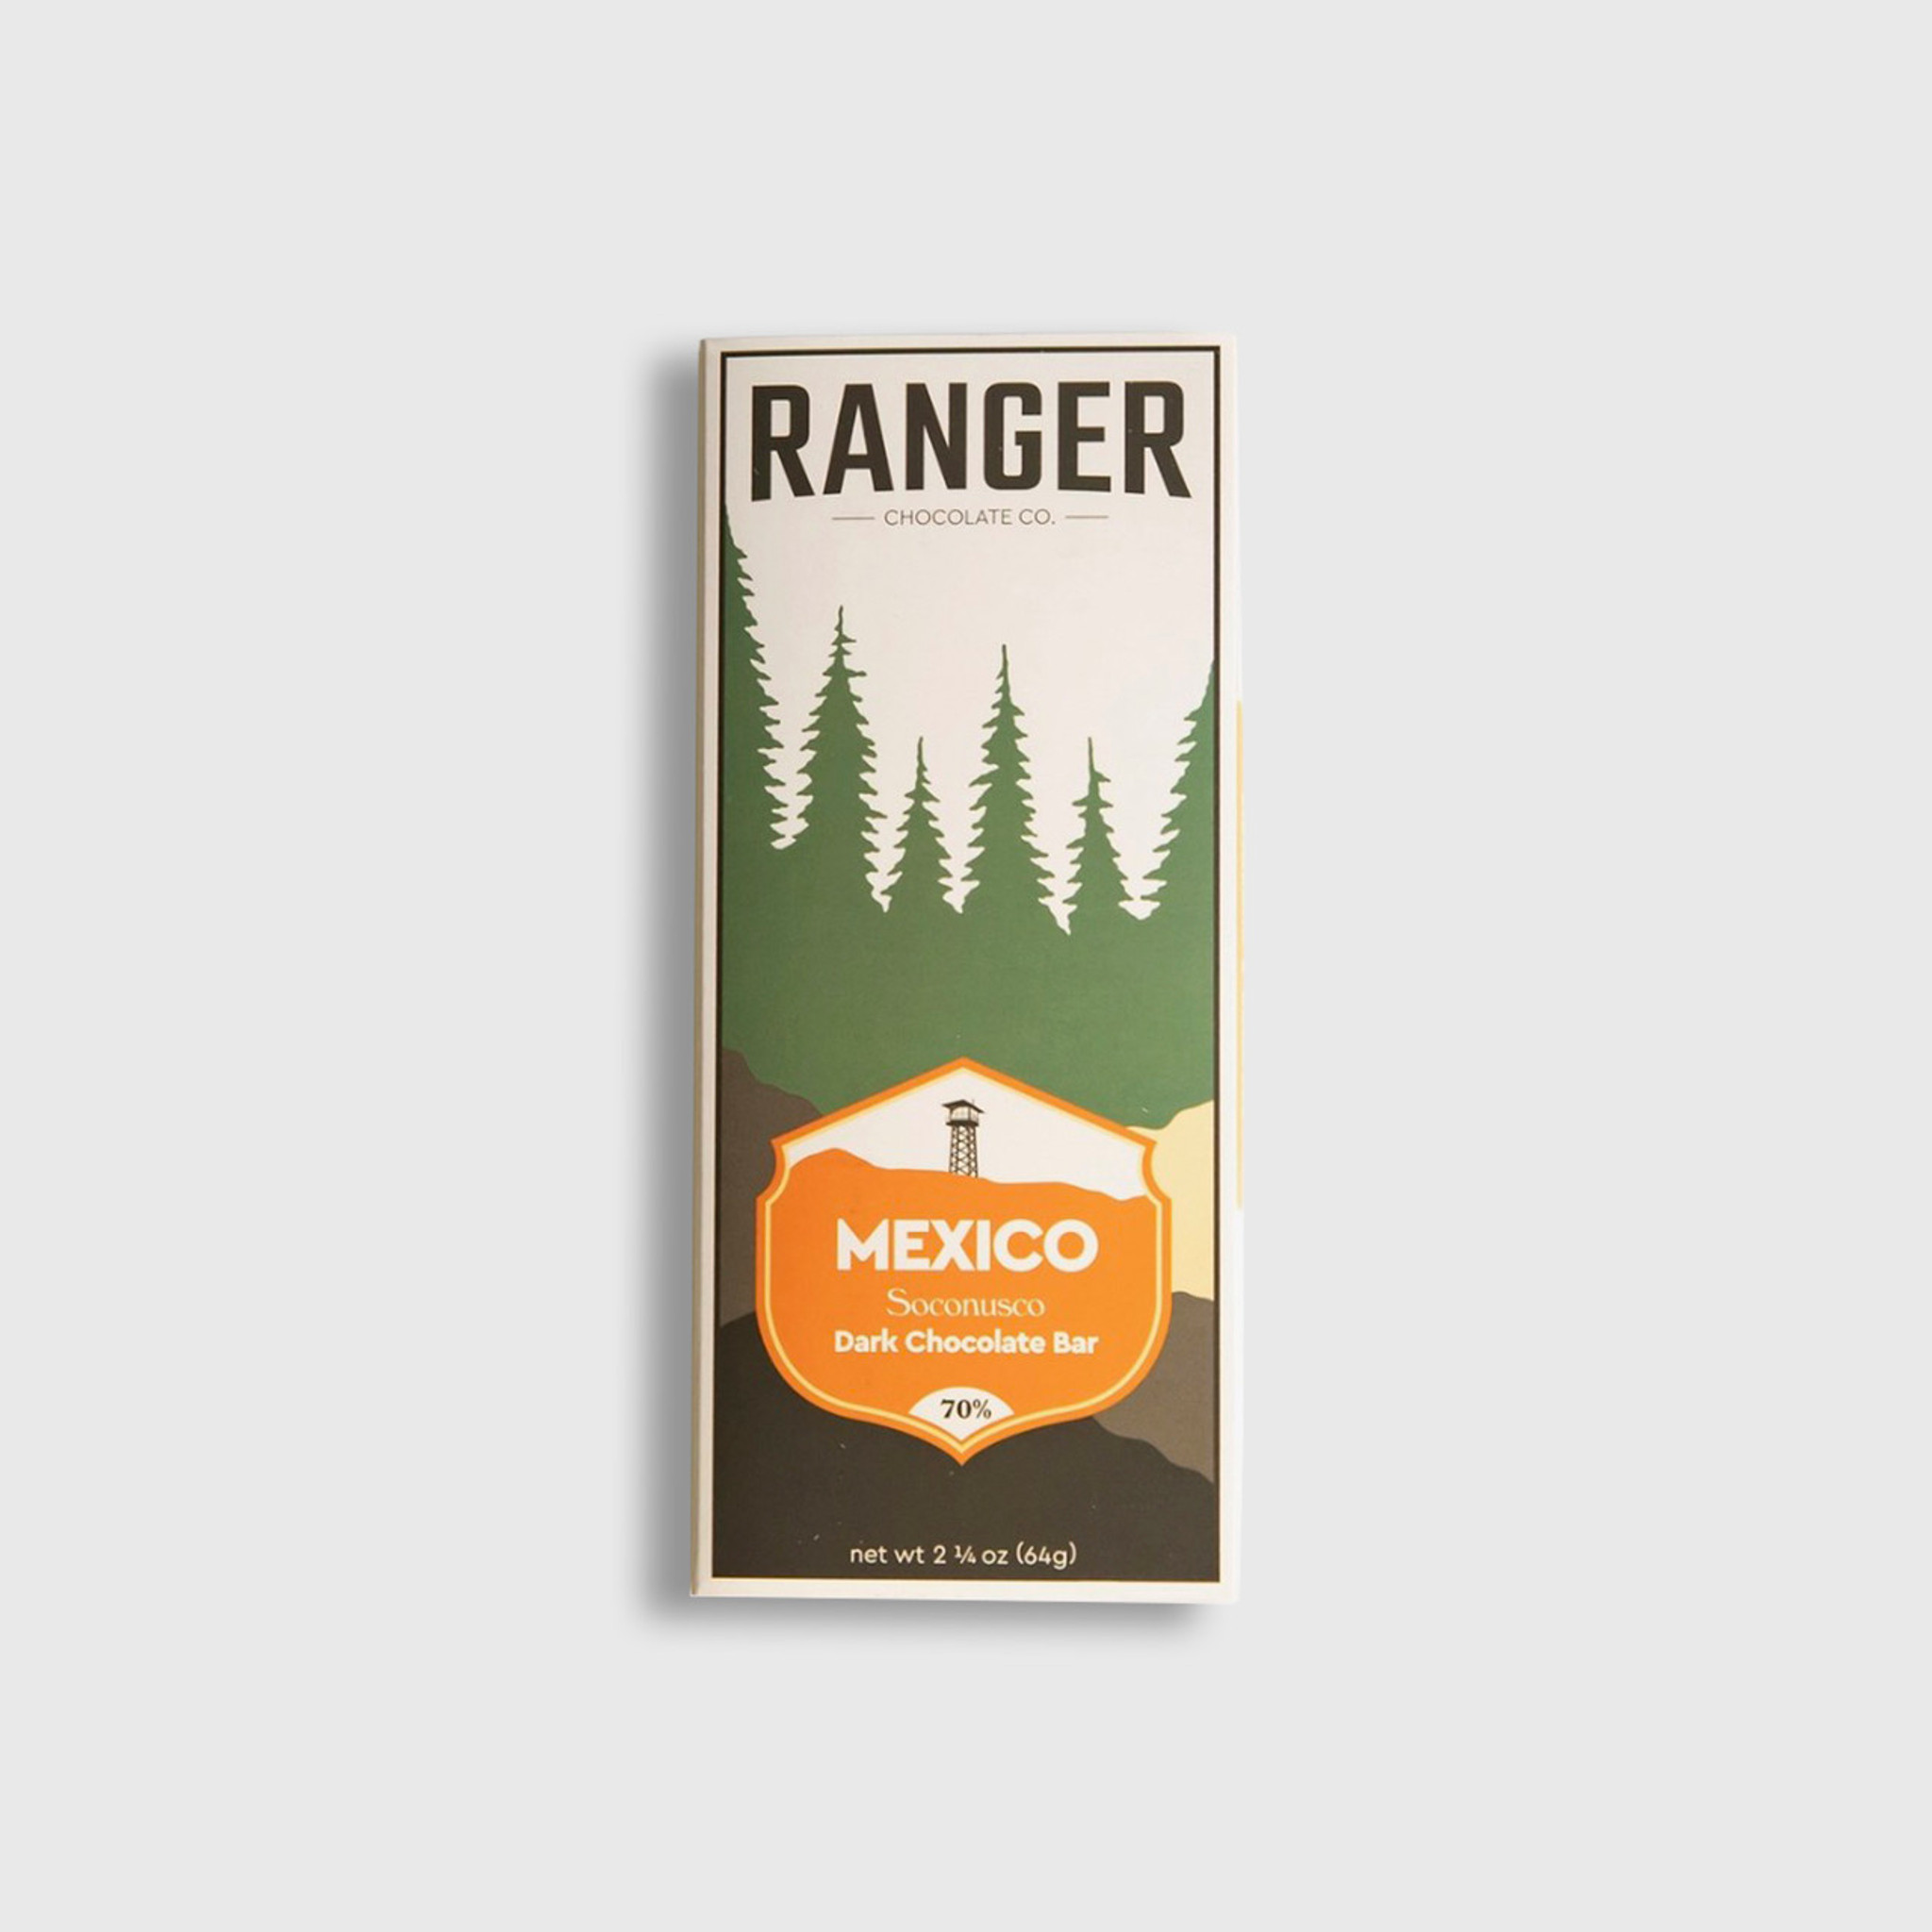 Ranger Chocolate Co. Mexico, Soconusco, 70% Dark Chocolate Bar  1 1/4 oz. 